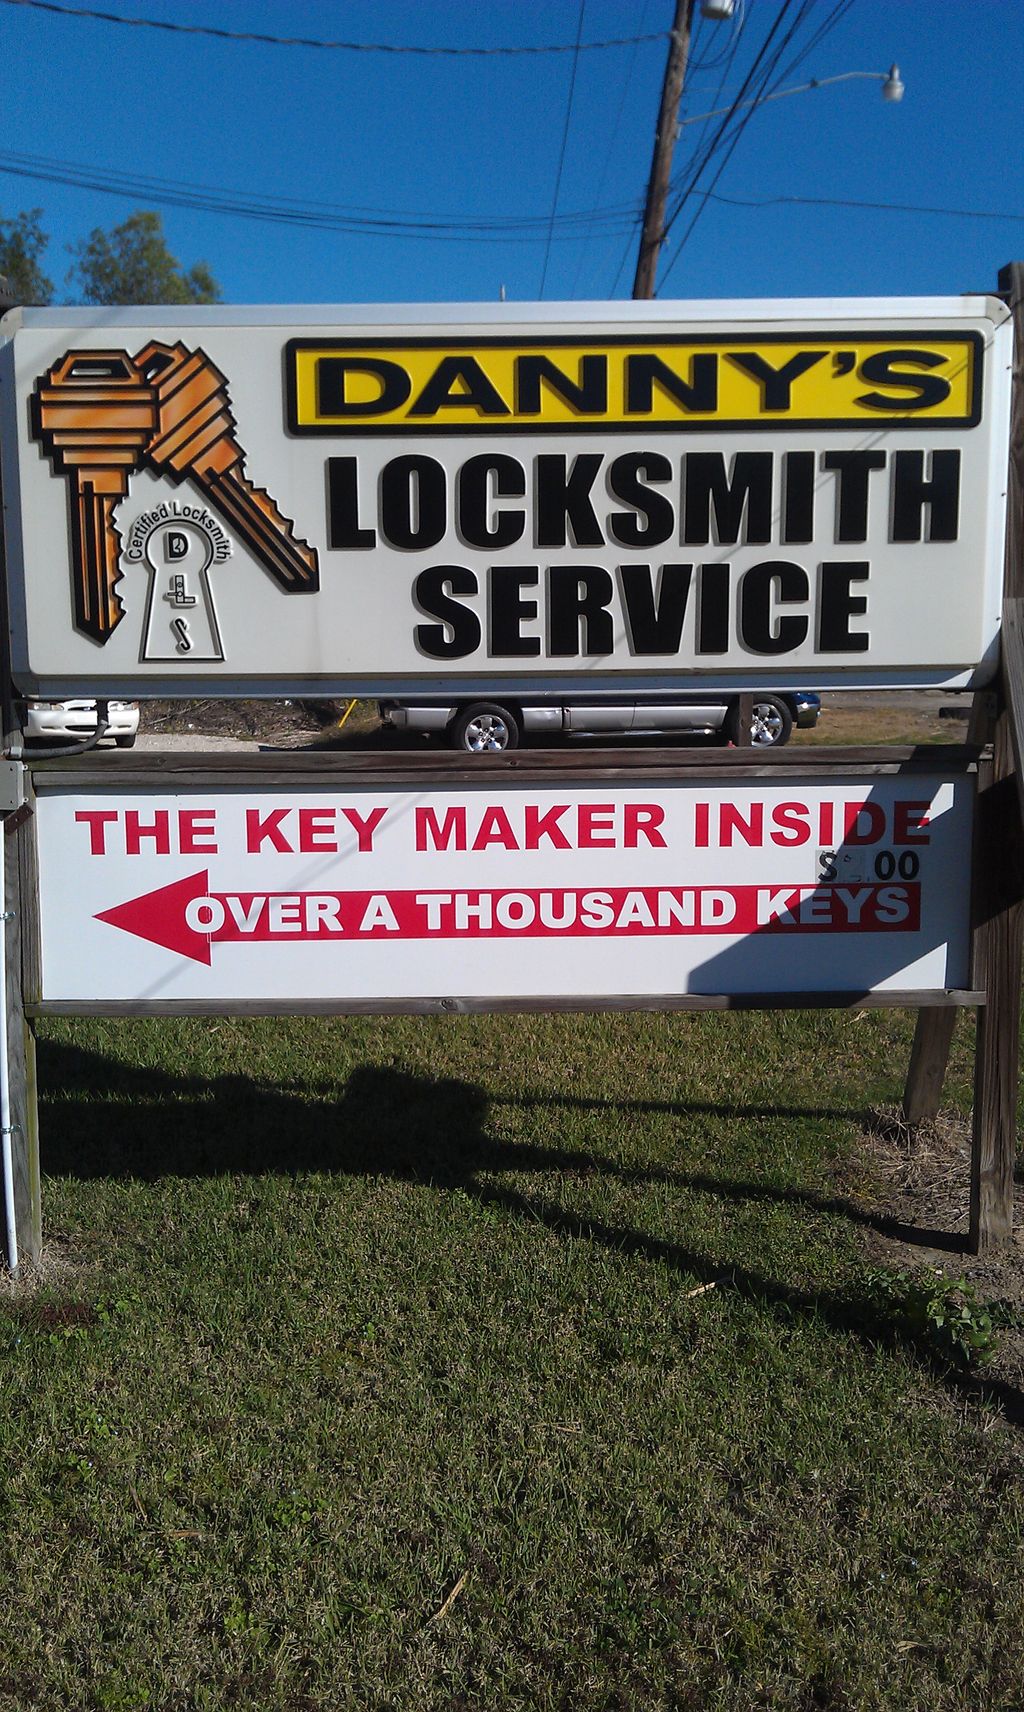 Danny's Locksmith Service